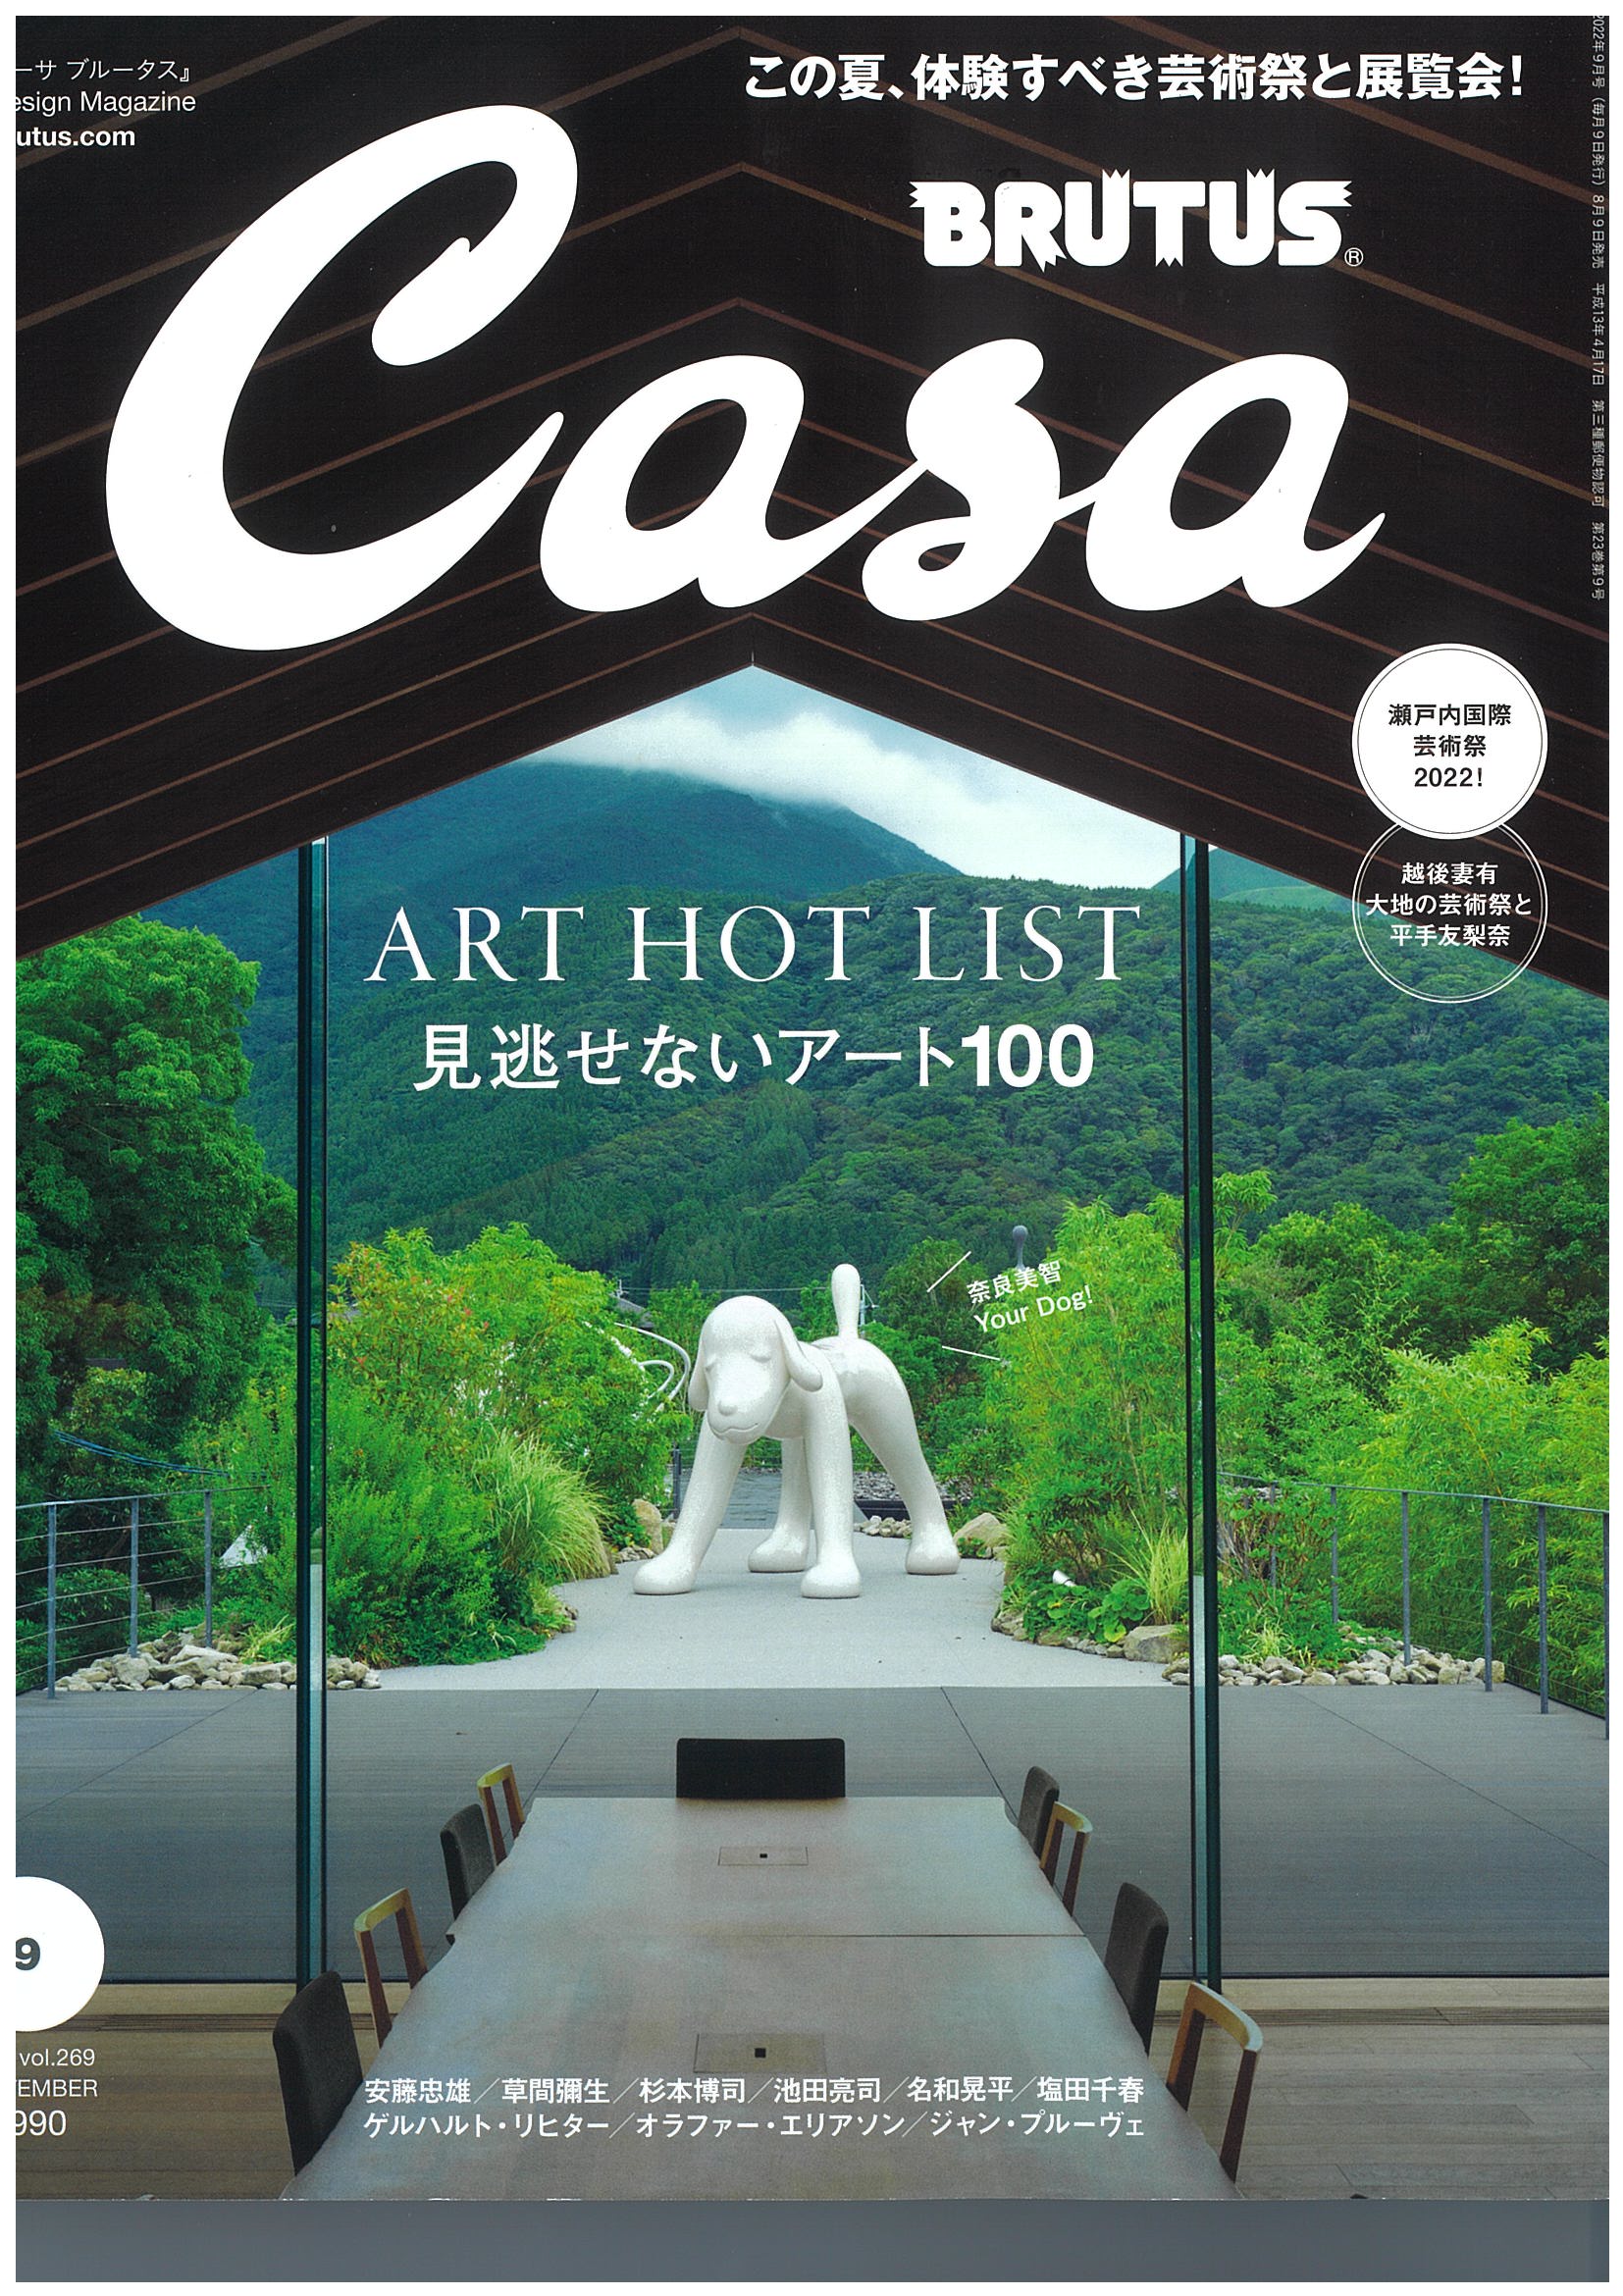 Featured in Casa BRUTUS's September issue – MAZ Tokyo